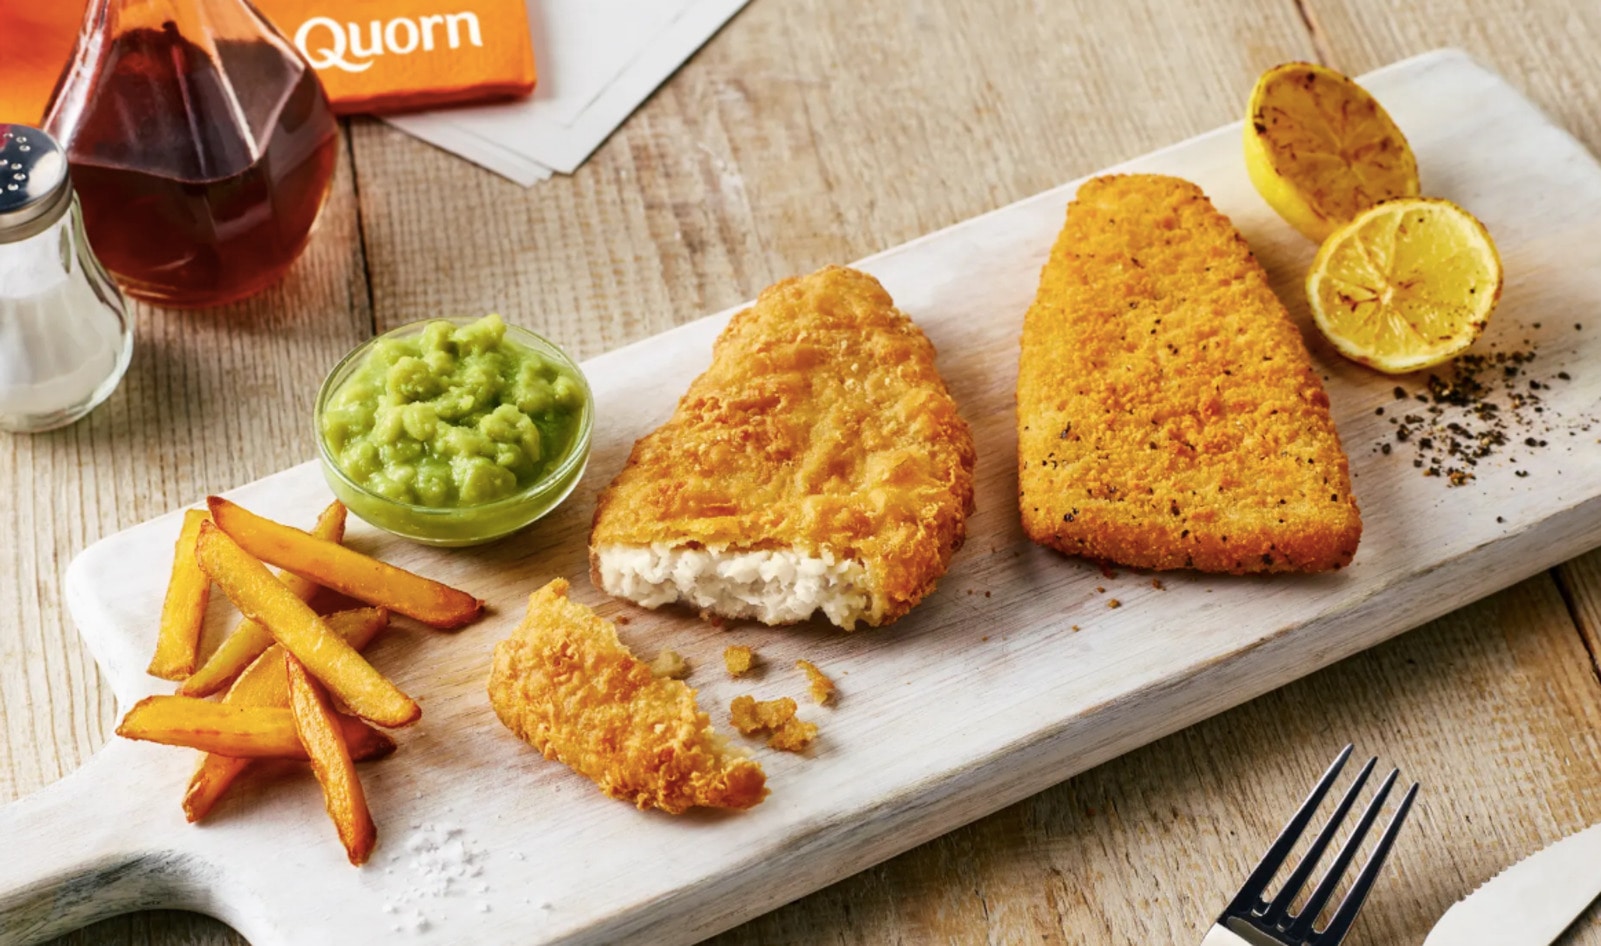 Quorn Launches Vegan Fish Filets